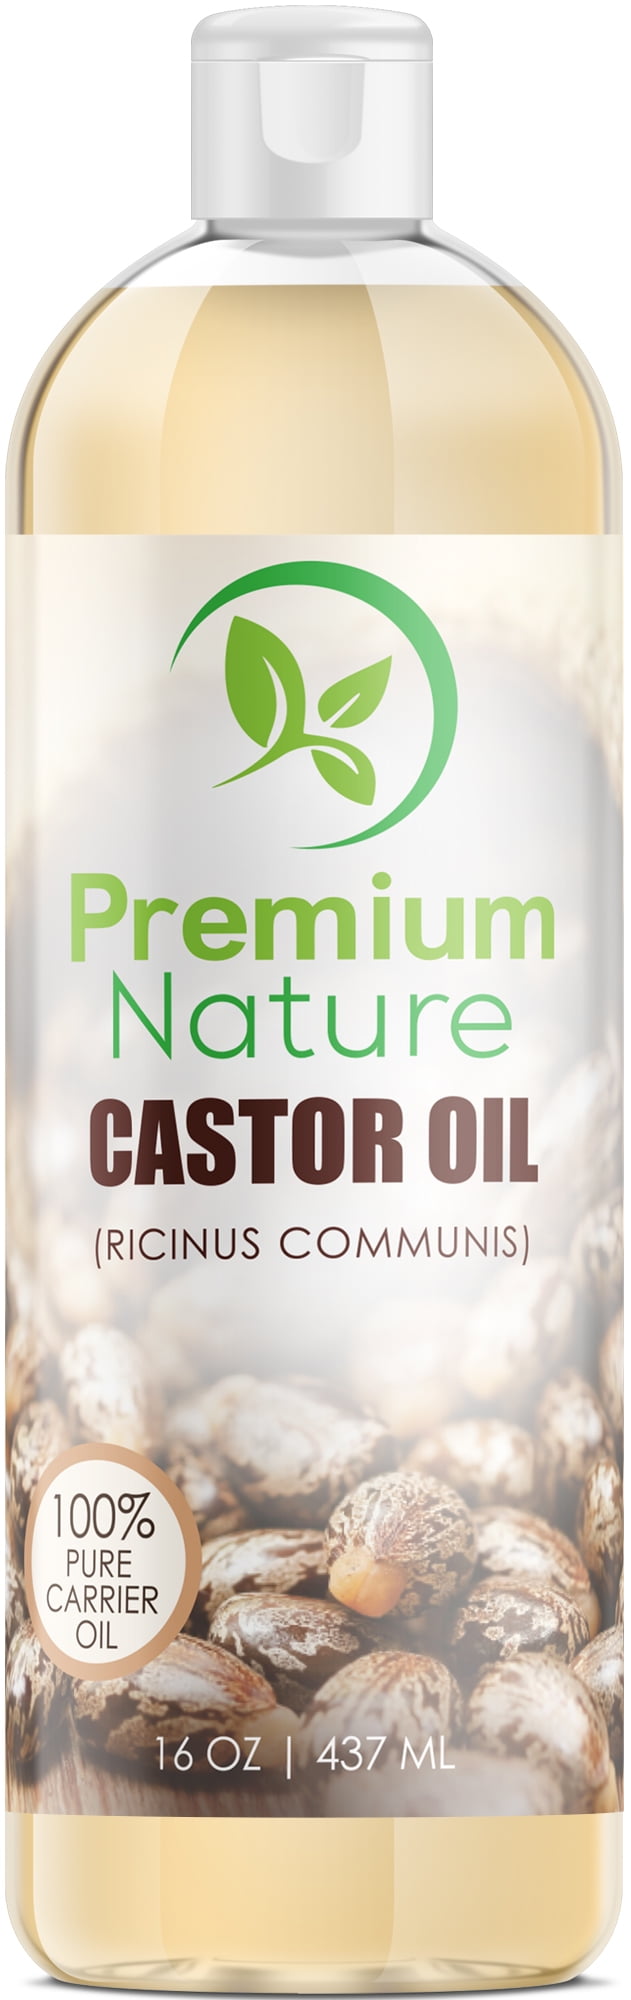 castor-oil-pure-carrier-oil-16-oz-cold-pressed-castrol-oil-for